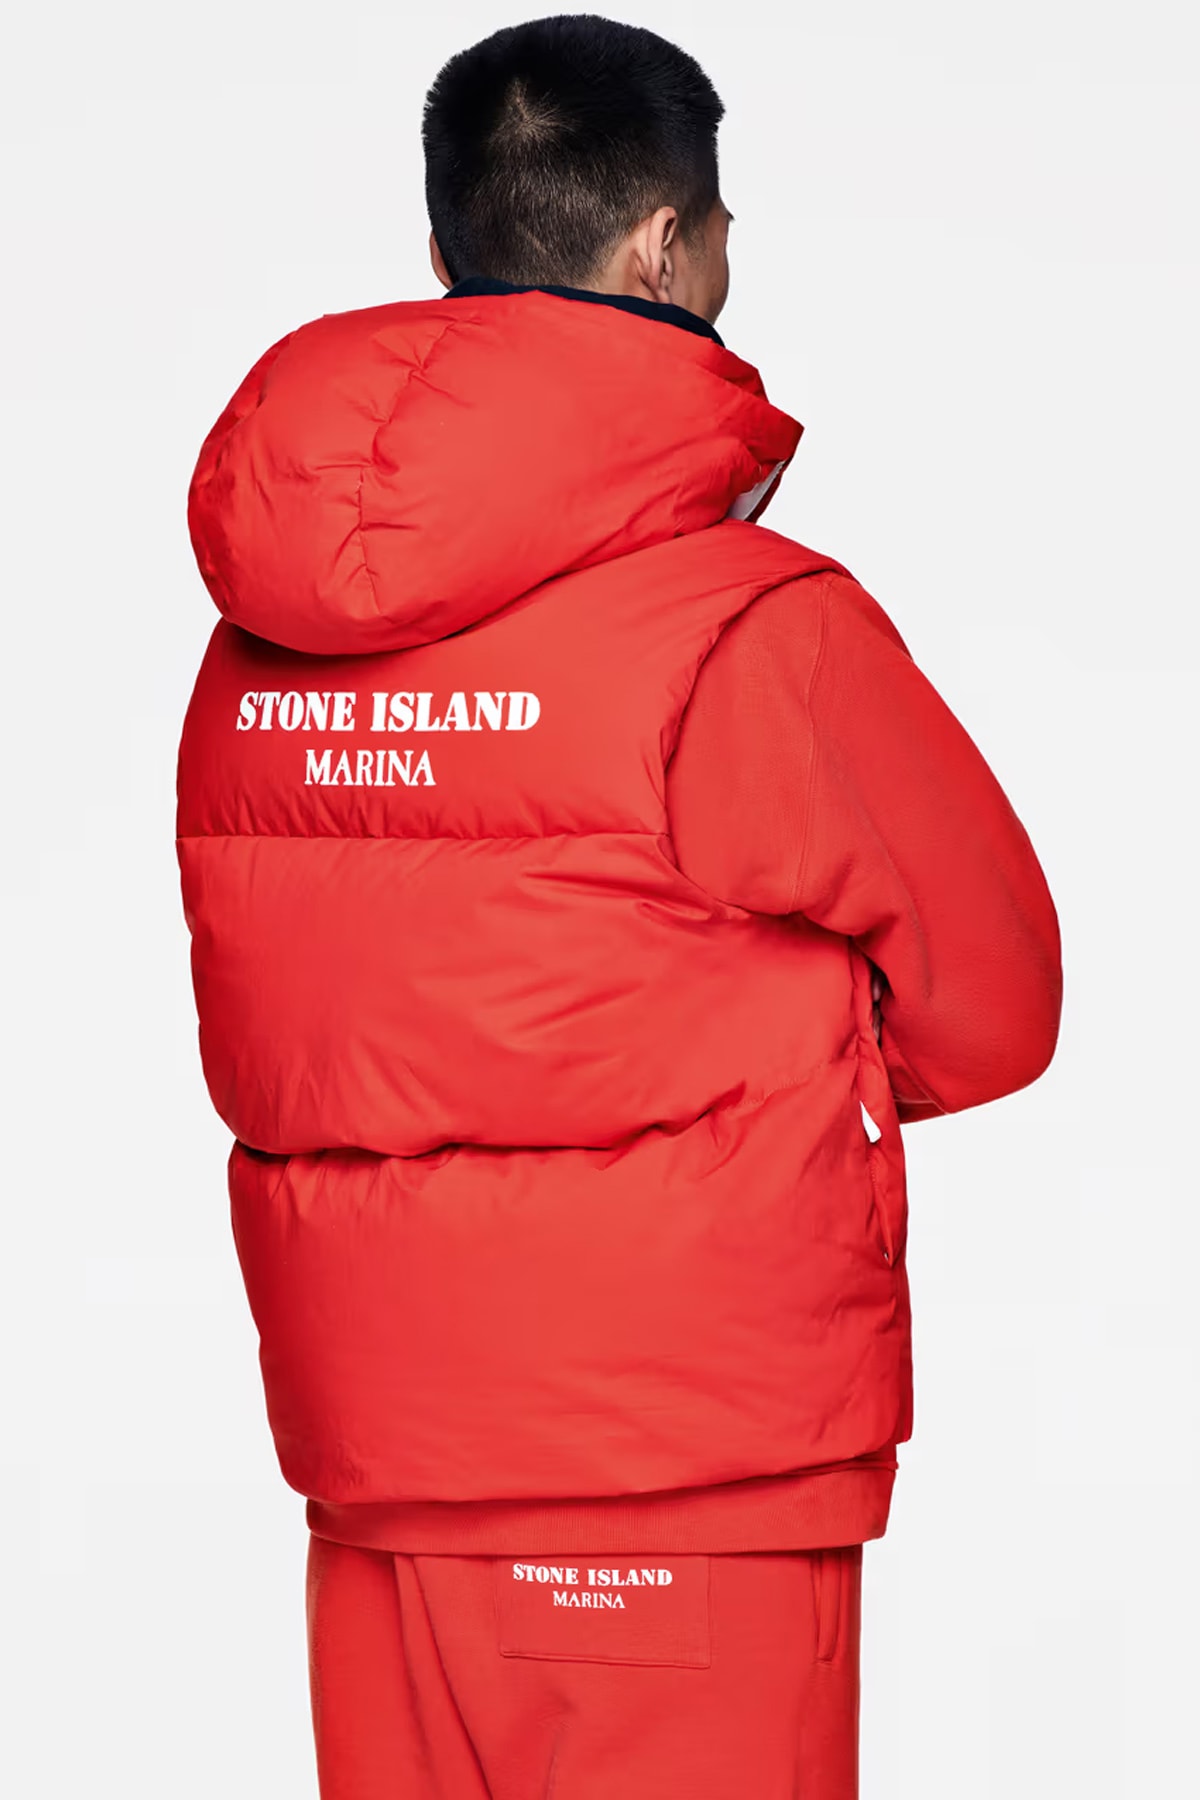 Stone Island 23/24 秋冬「Icon Imagery」系列 Lookbook 正式發佈